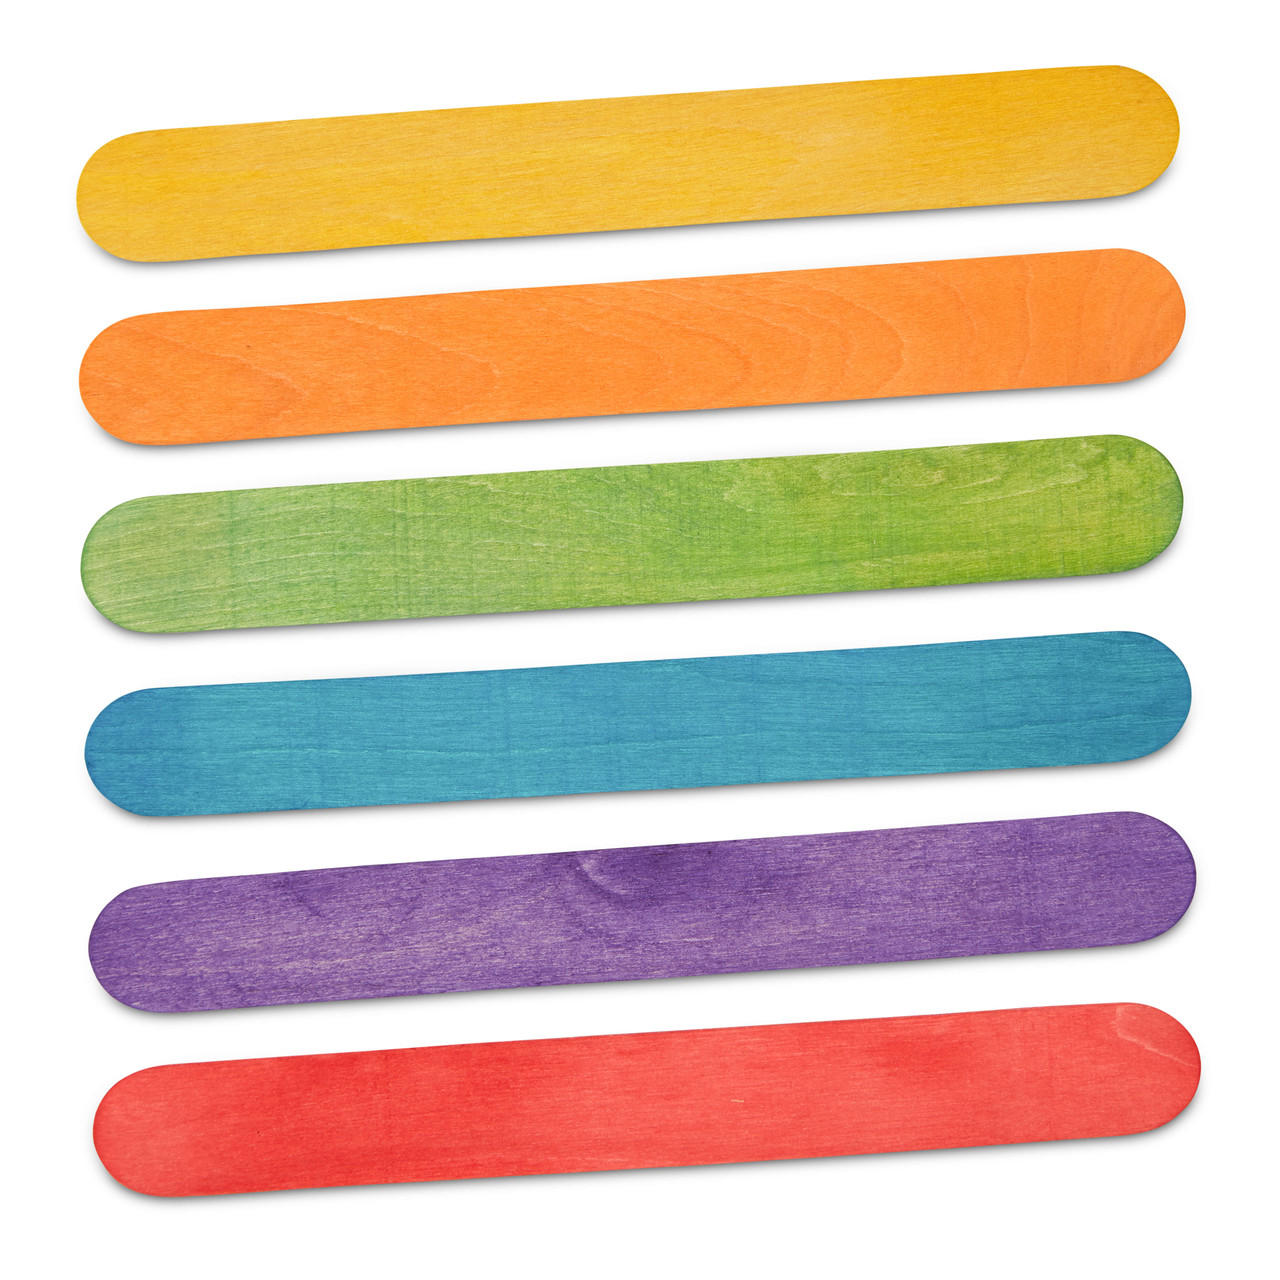  Praisebank 100pcs Craft Sticks, 6x3/4, Popsicle